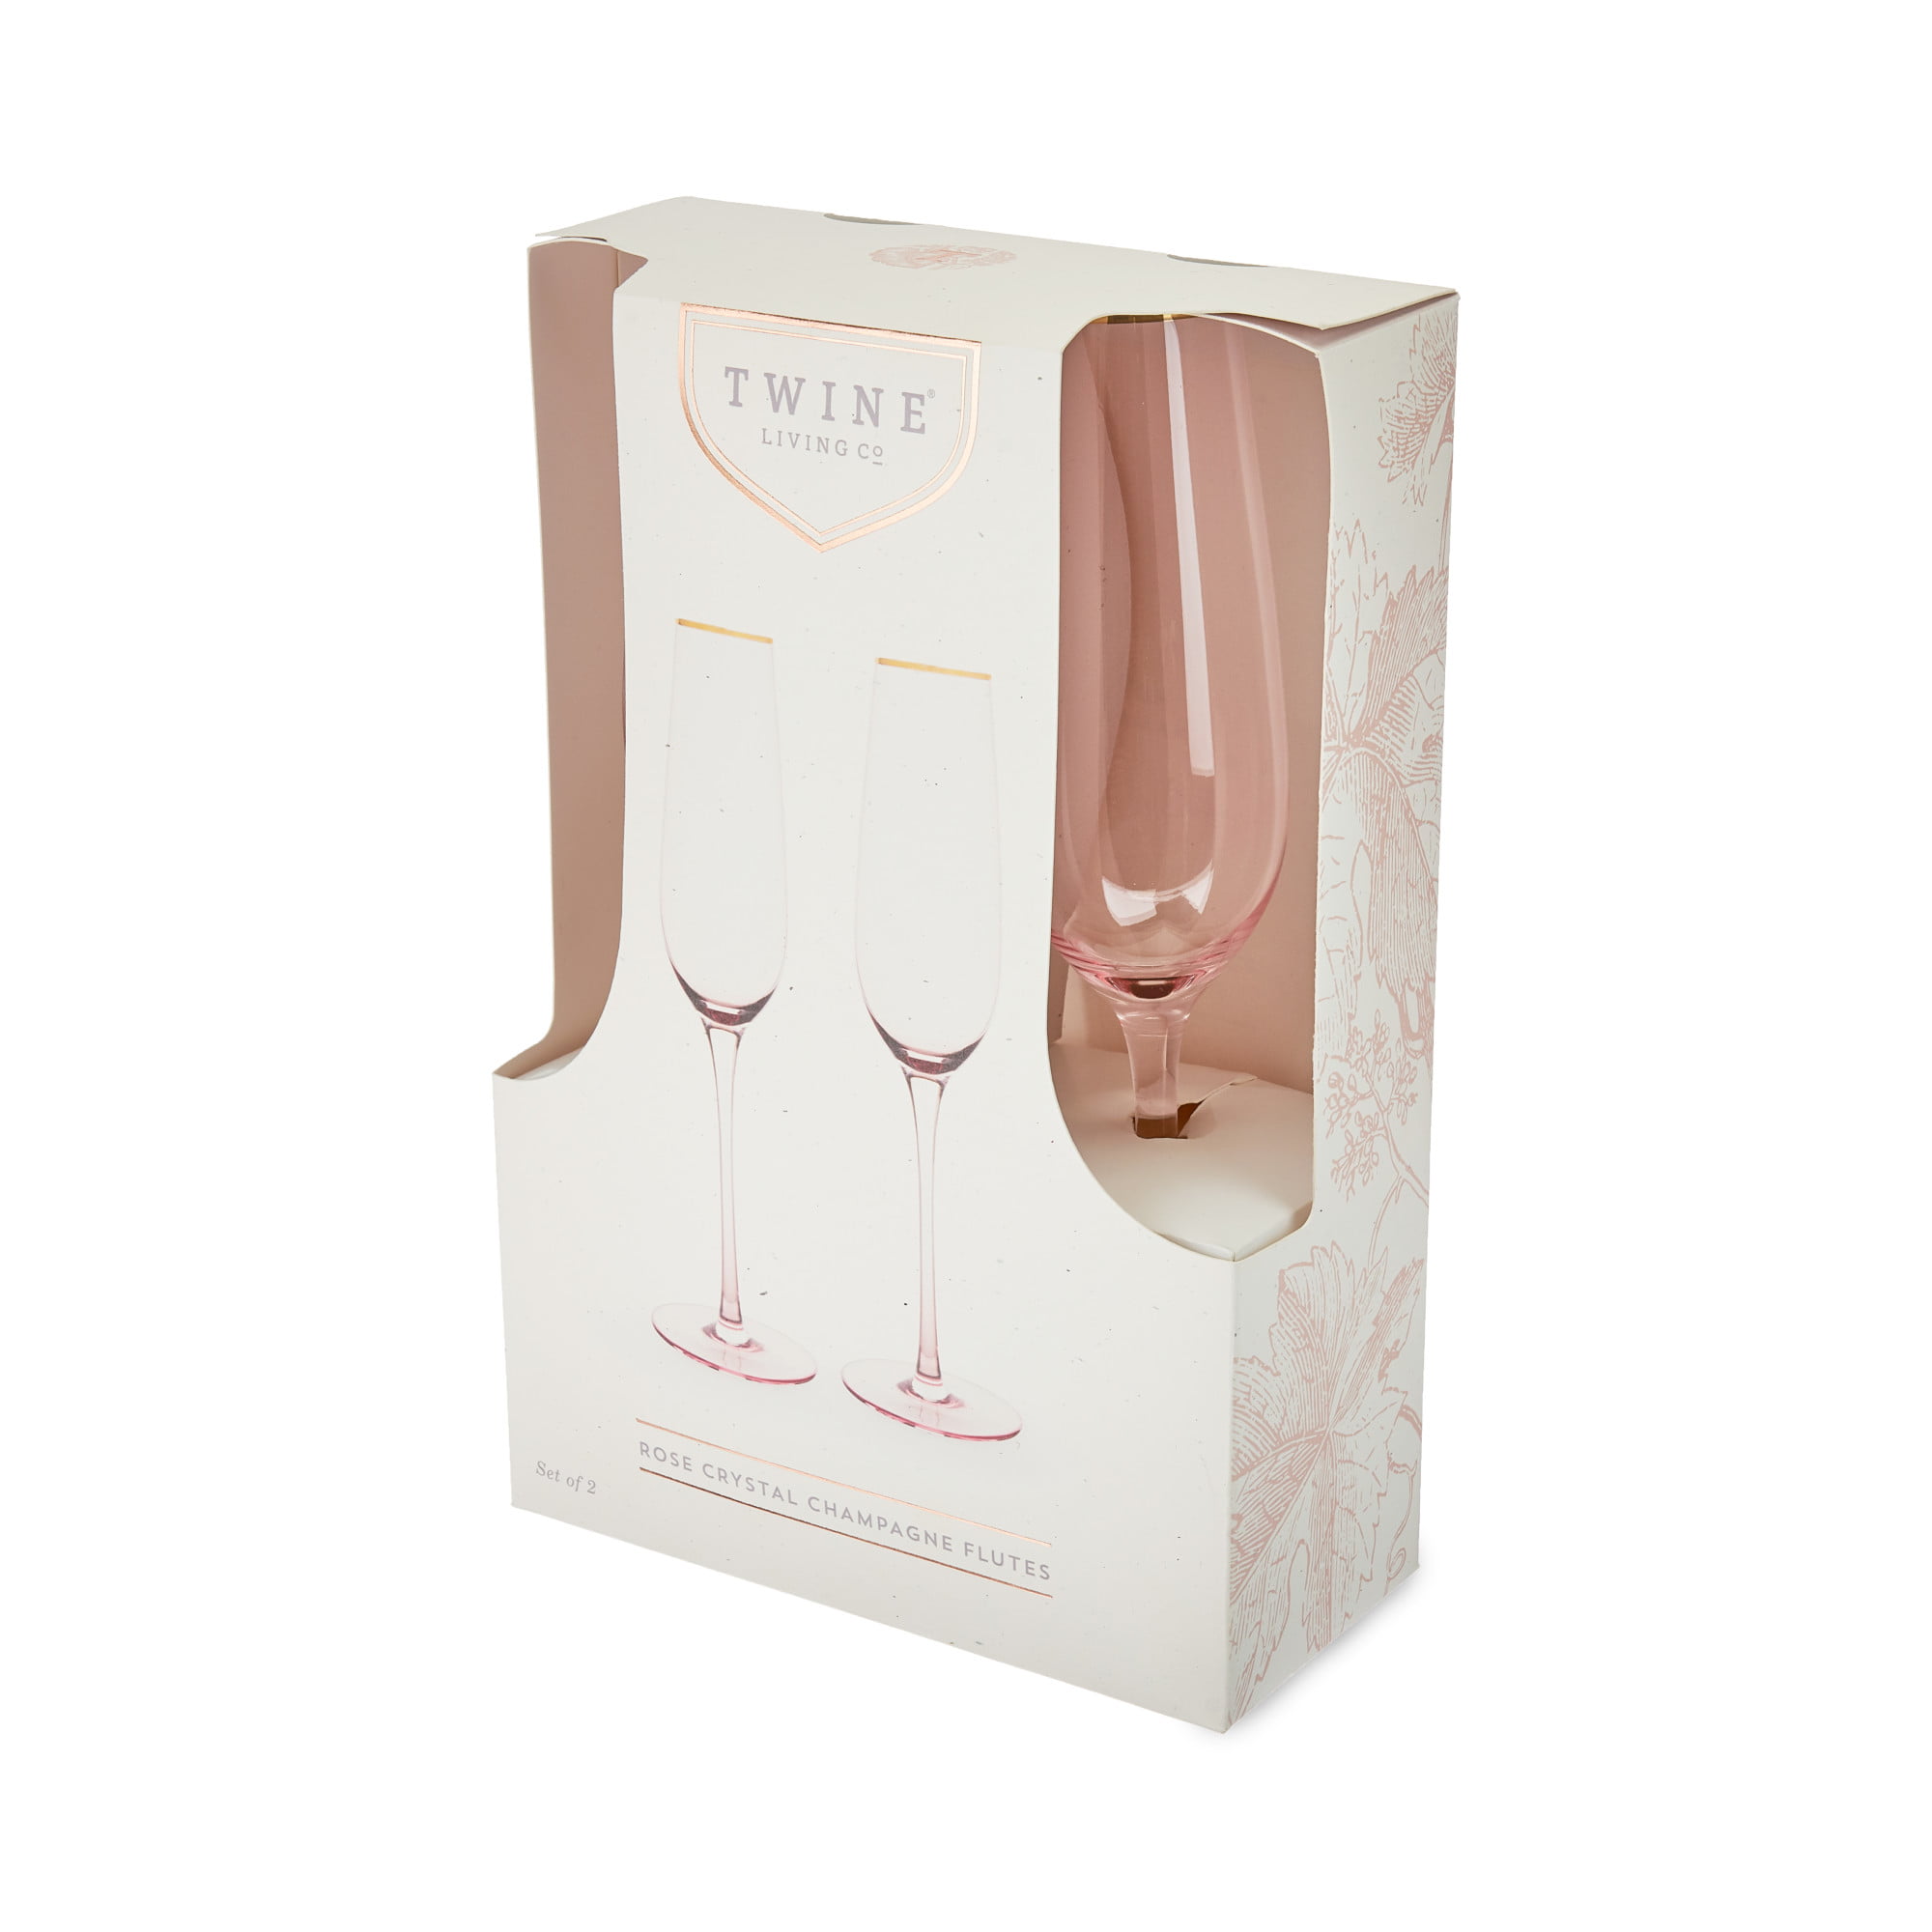 La Vie En Rose Champagne Glass Set of 2 - Handcrafted